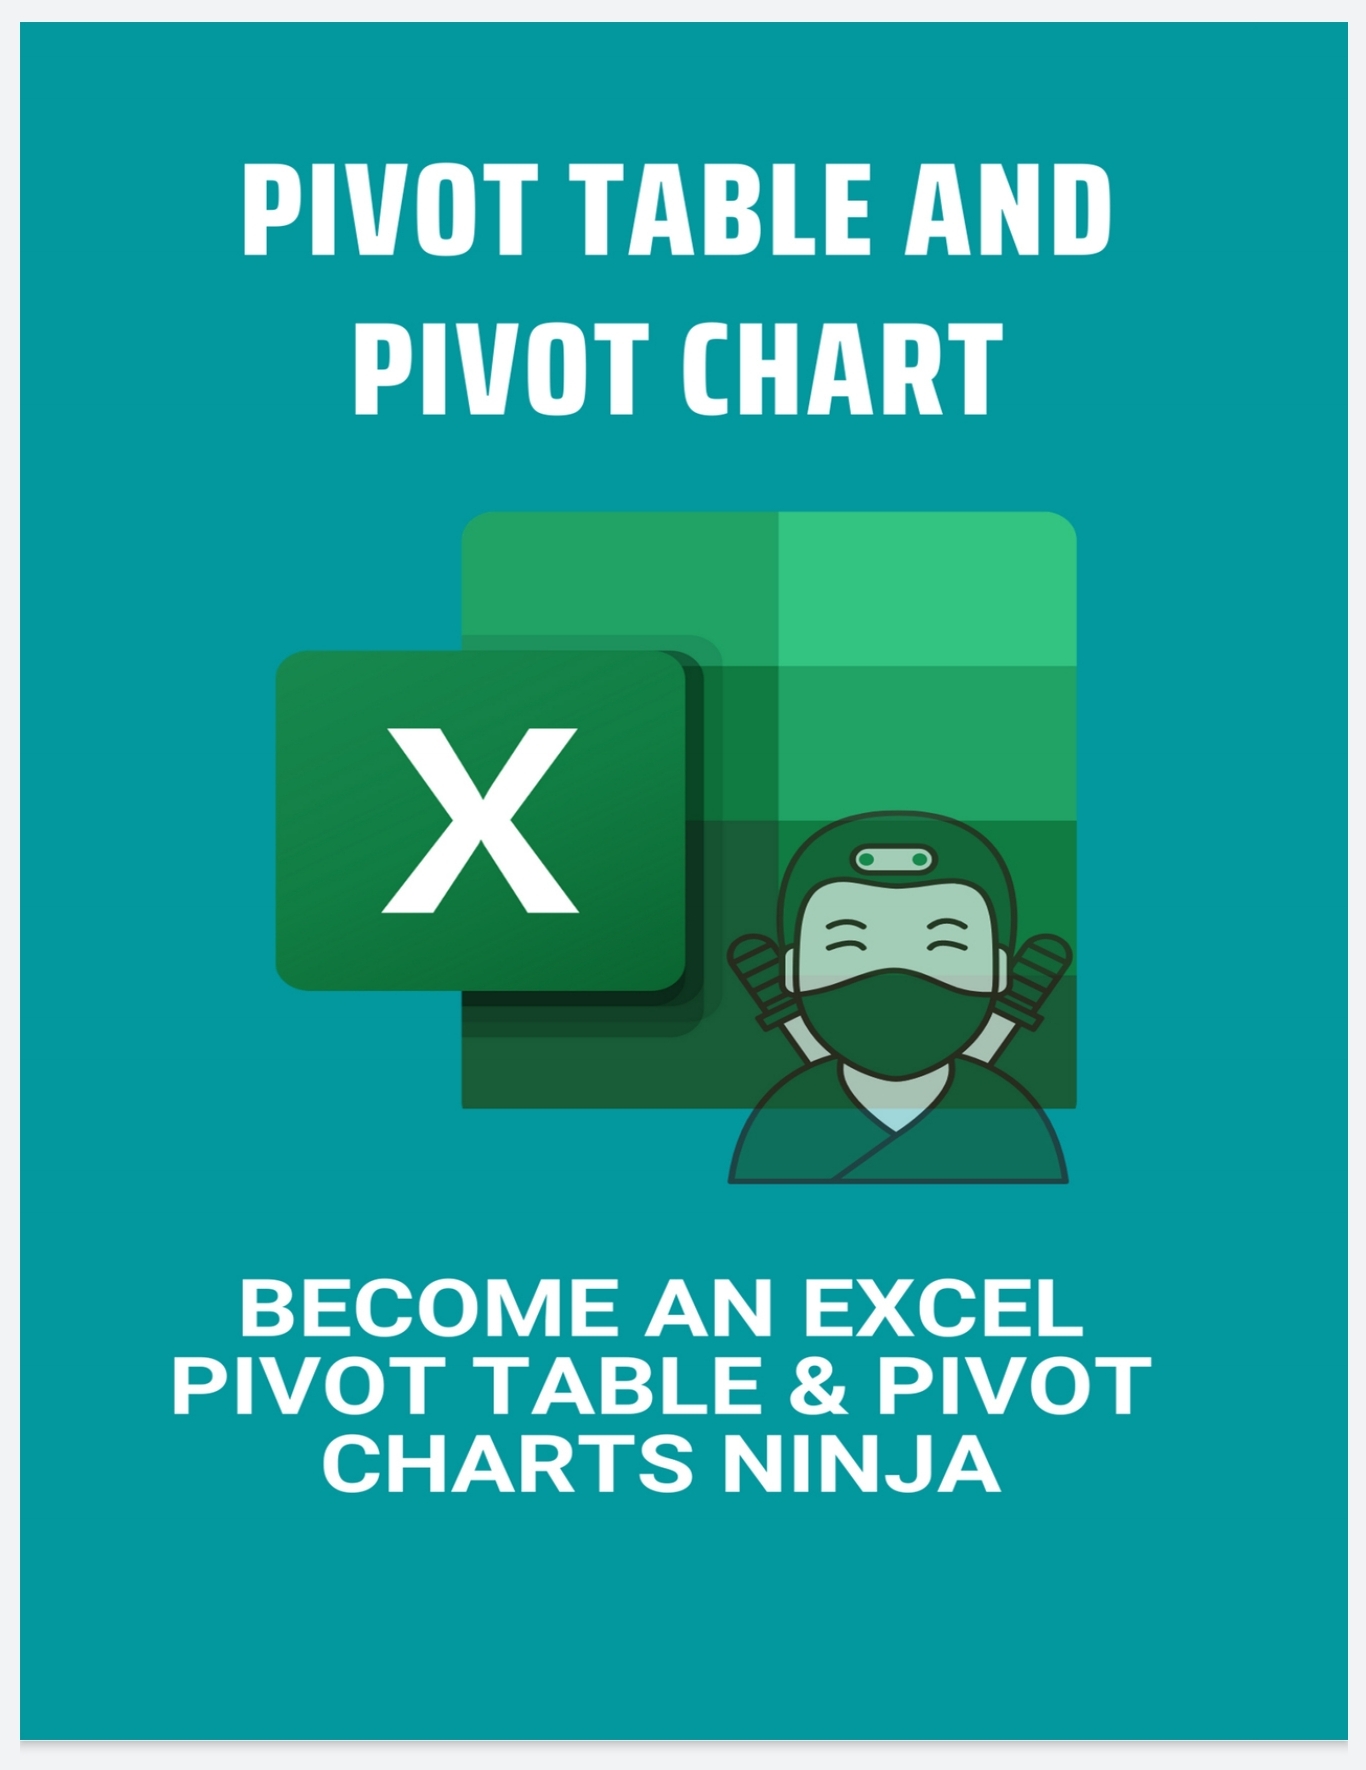 pivot-table-and-pivot-chart-become-an-excel-pivot-table-pivot-charts-ninja-what-is-a